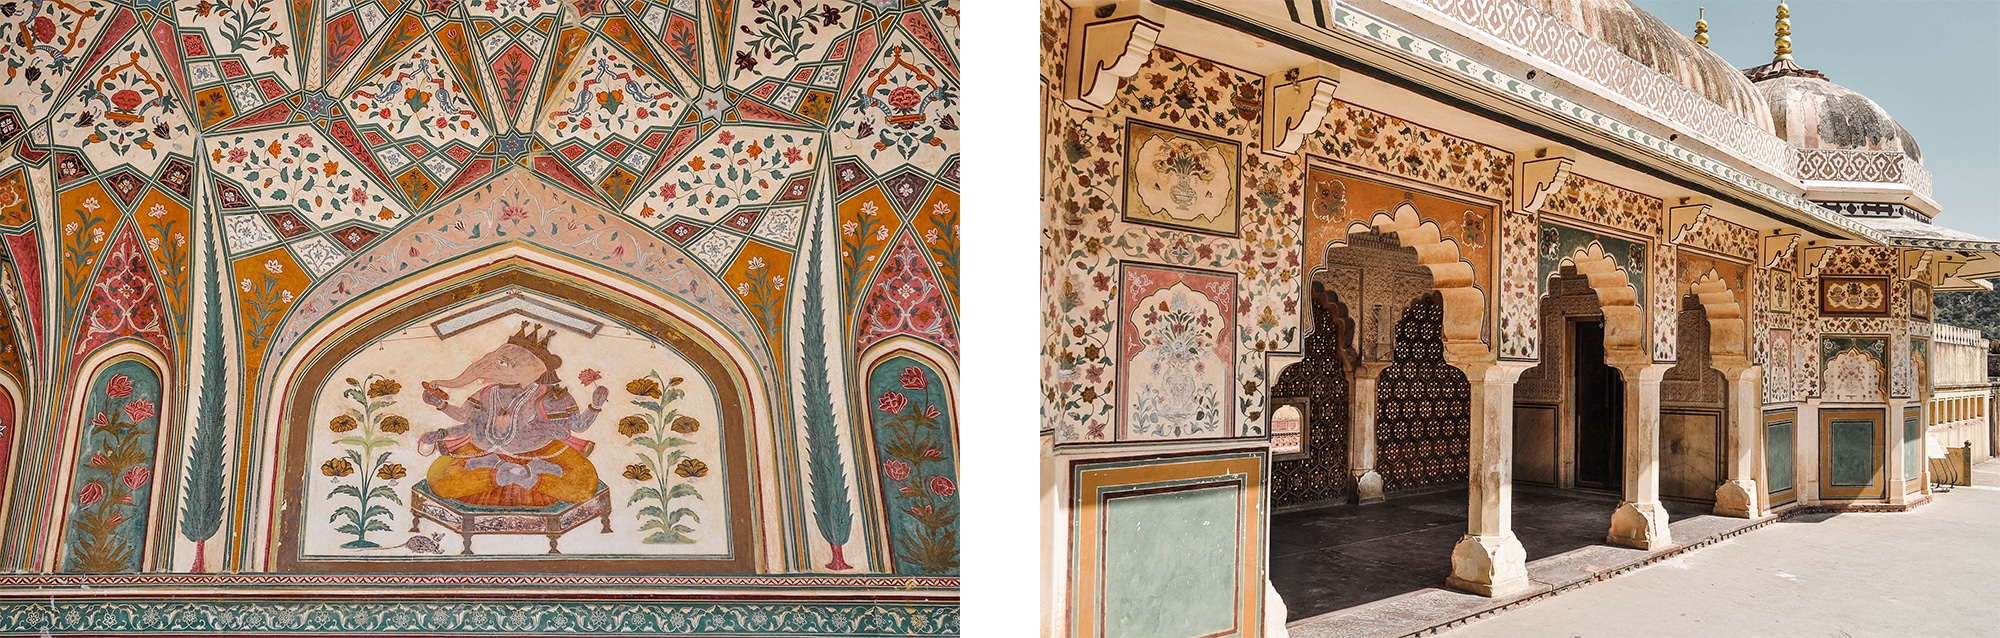 Des fresques dans le fort Amber à Jaipur en Inde